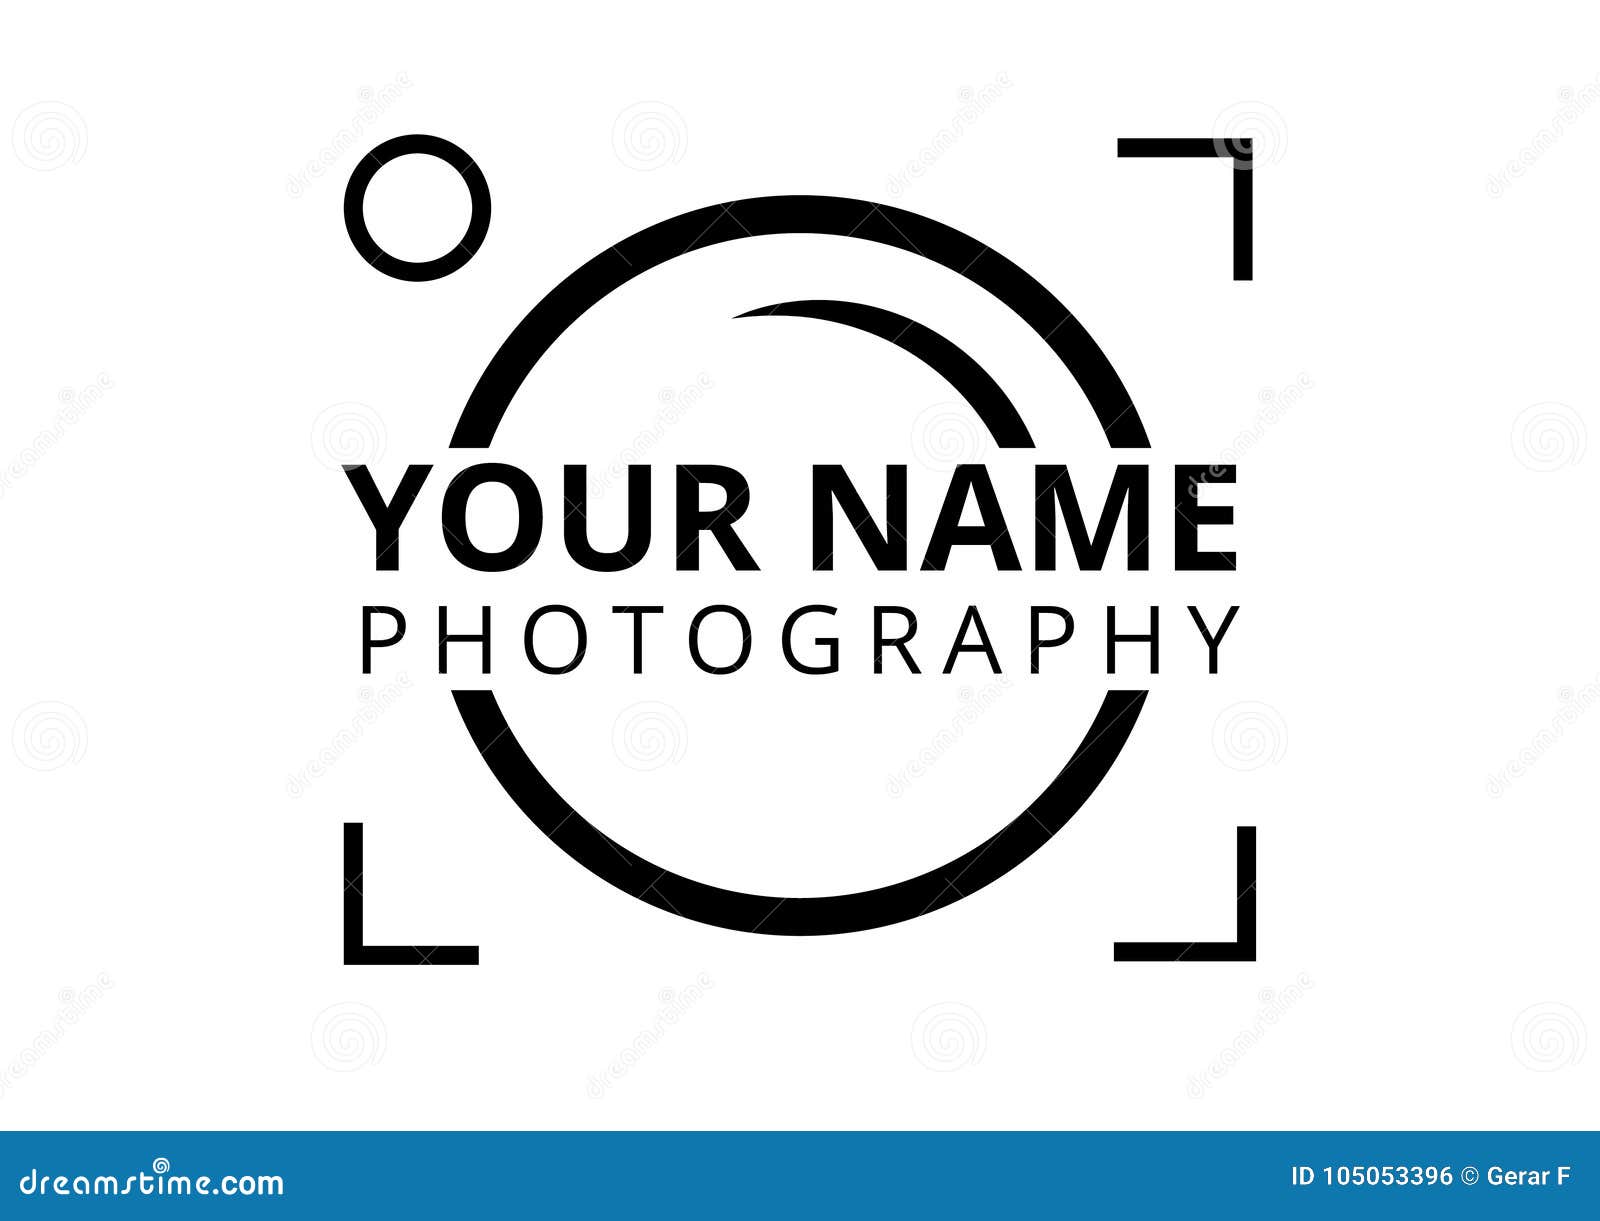 photographer logo plain style